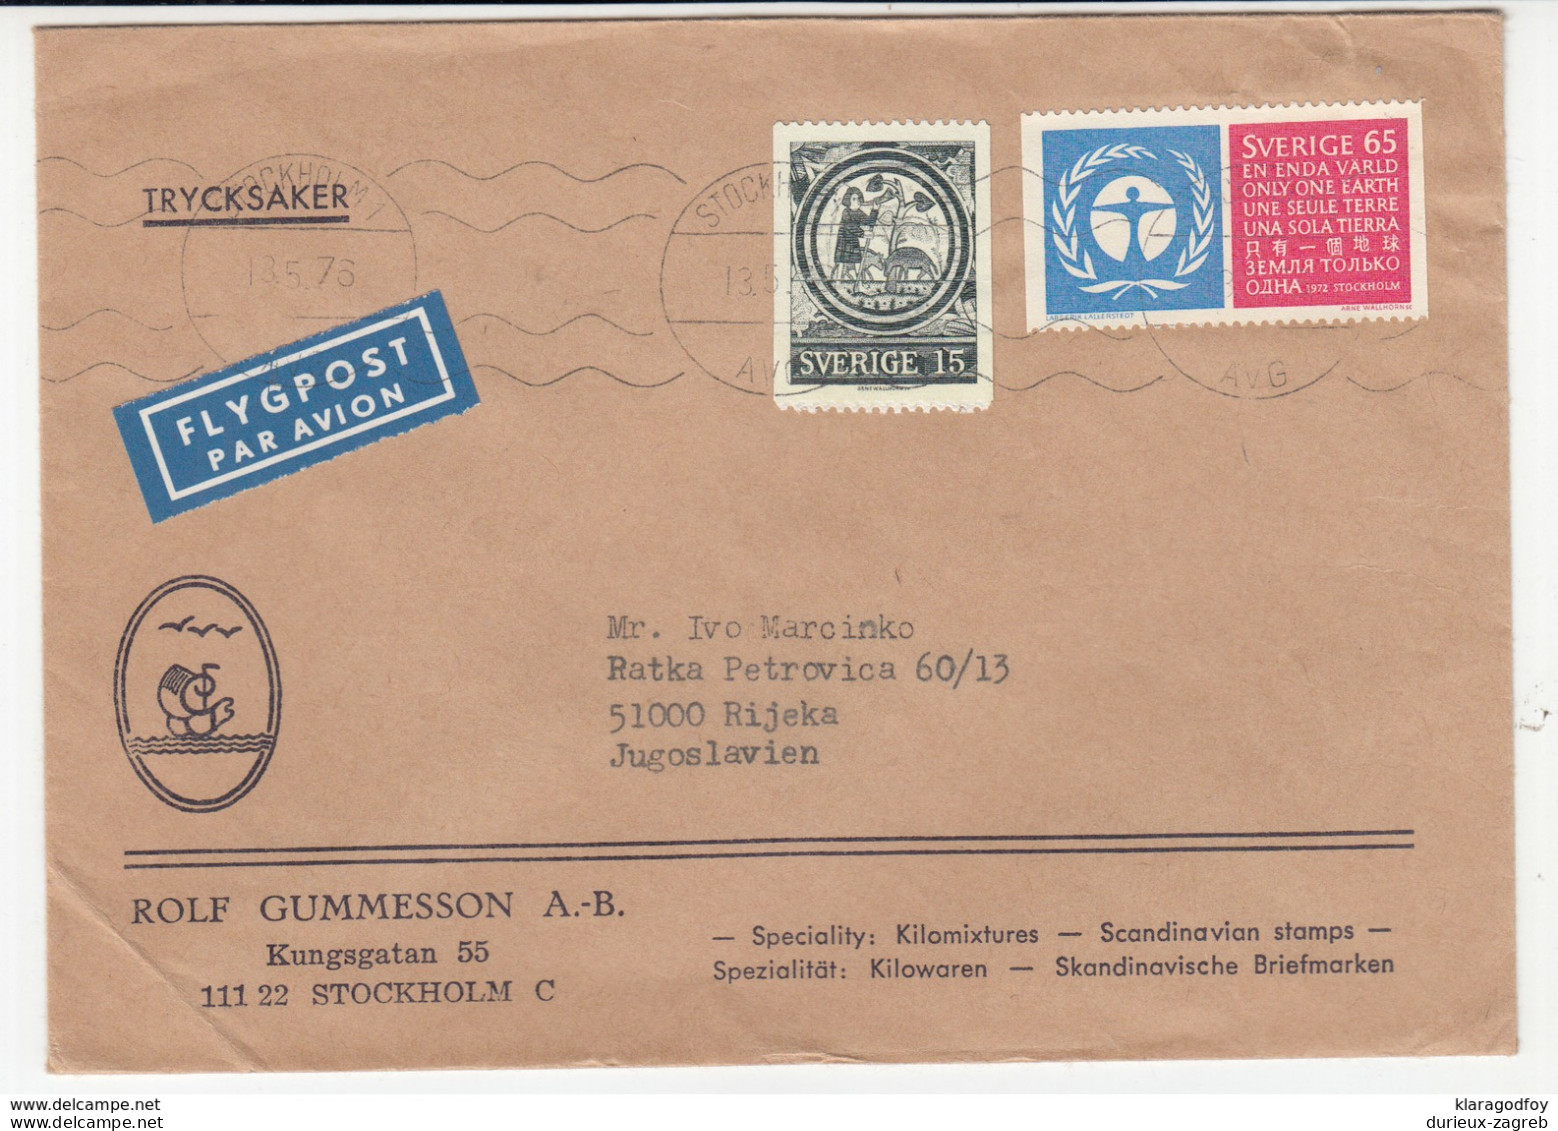 Sweden, Rolf Gummesson Company Letter Cover Airmail Travelled 1976 Stockholm Pmk B180220 - Cartas & Documentos